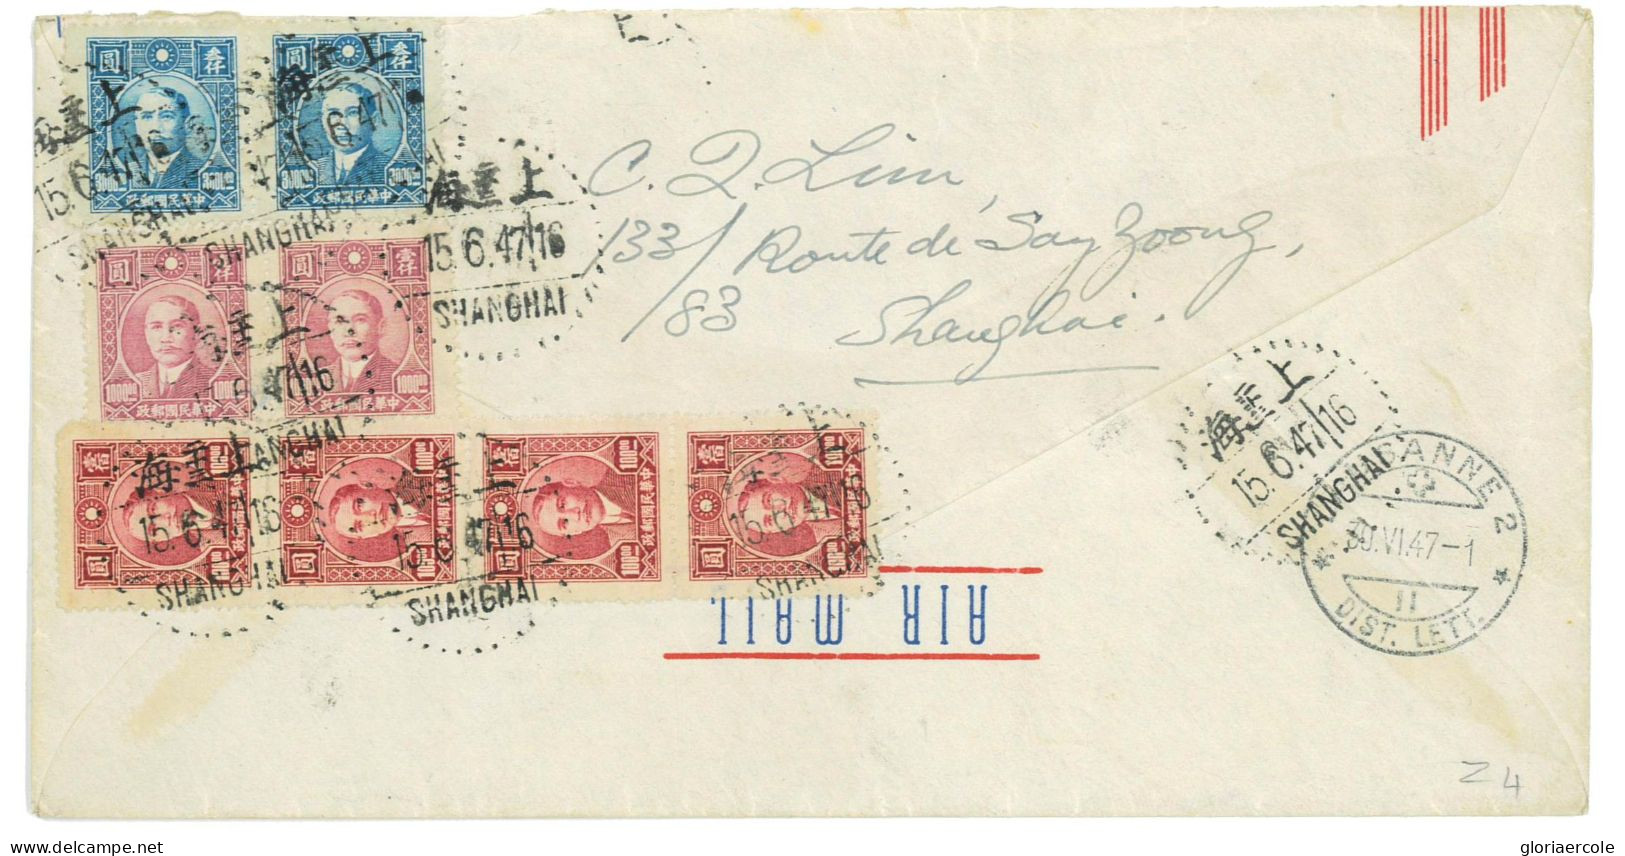 P2936 -CHINA , REGISTRED LETTER FROM SHANGAI TO SWITZERLAND, 1947 $ 8400 FRANKING. - 1912-1949 Republic